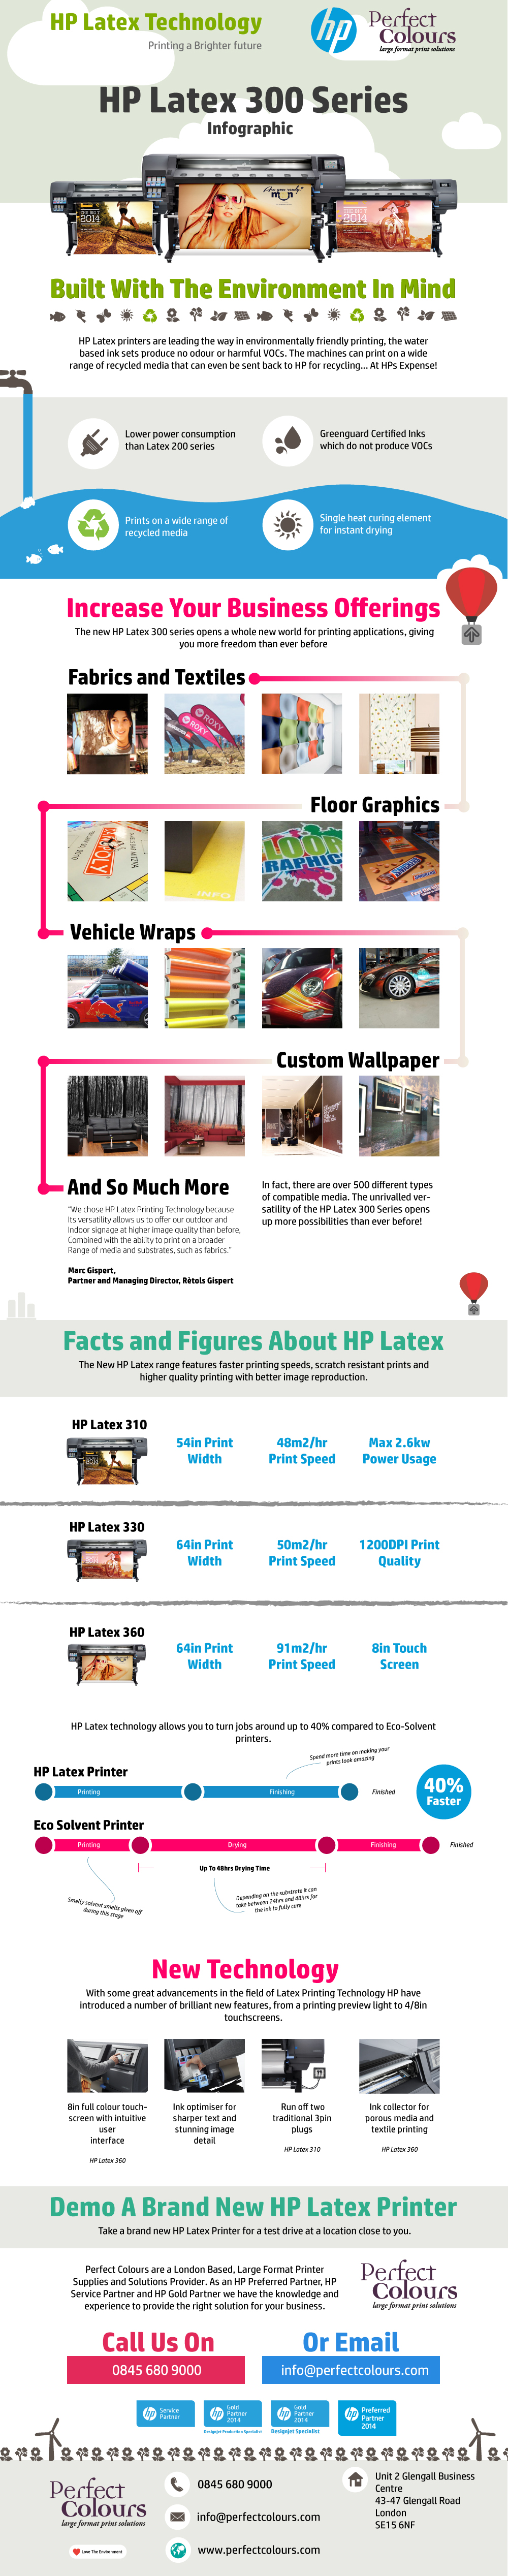 HP Latex 300 Series Infographic